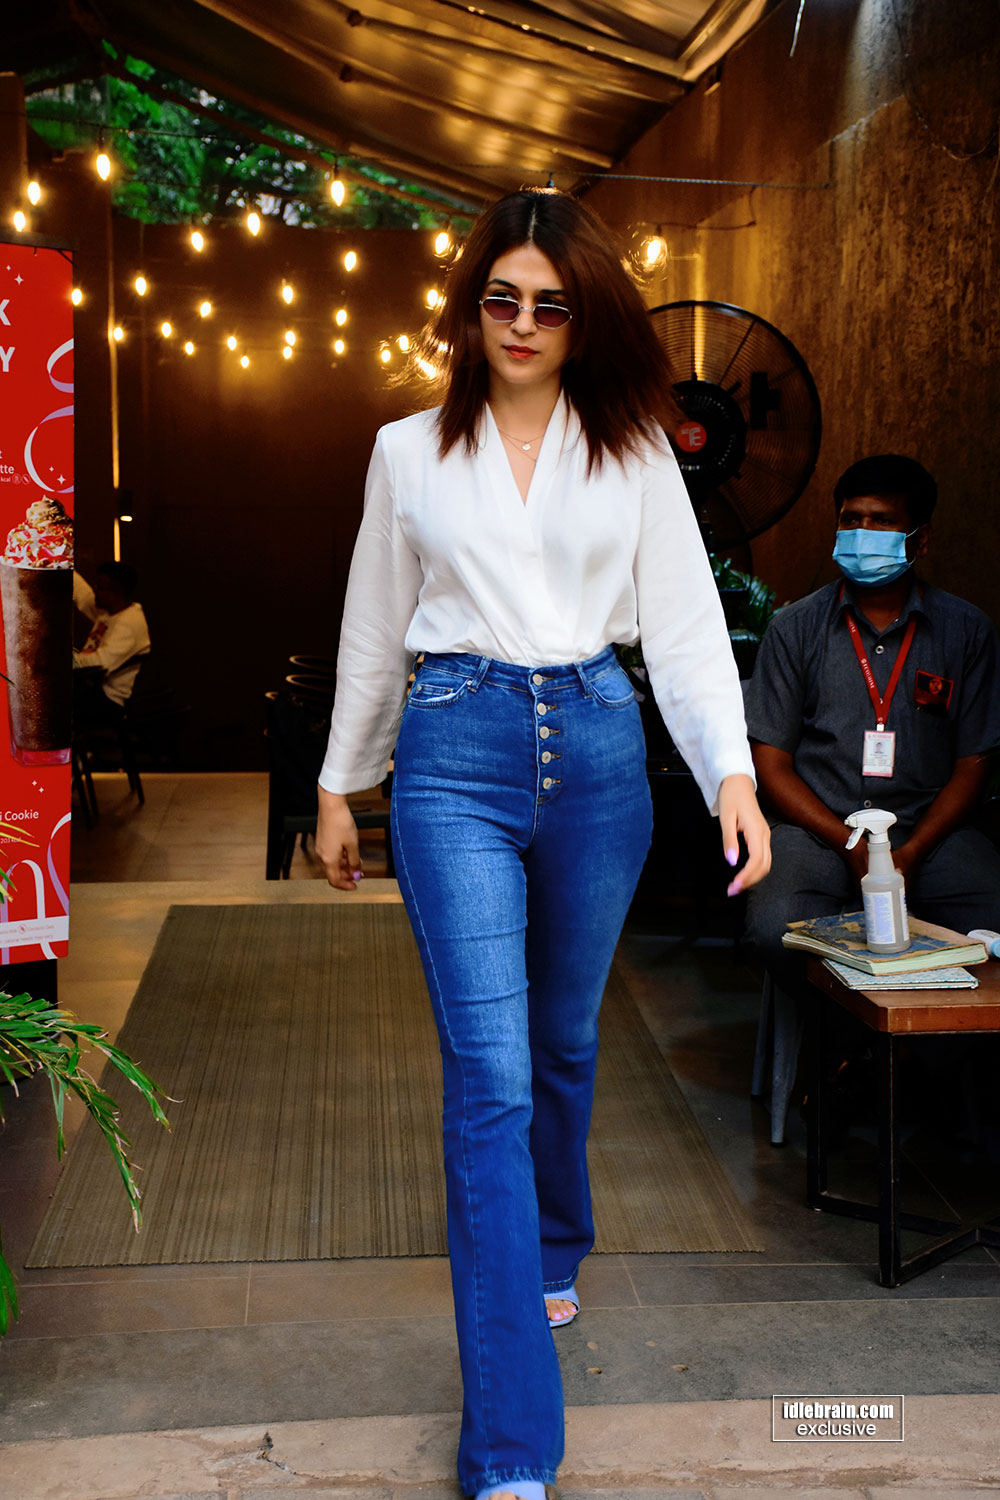 Fashion Divas: Anita Hassanandani looks divine in white, Divyanka Tripathi  makes a statement pose in floral top and denim jeans